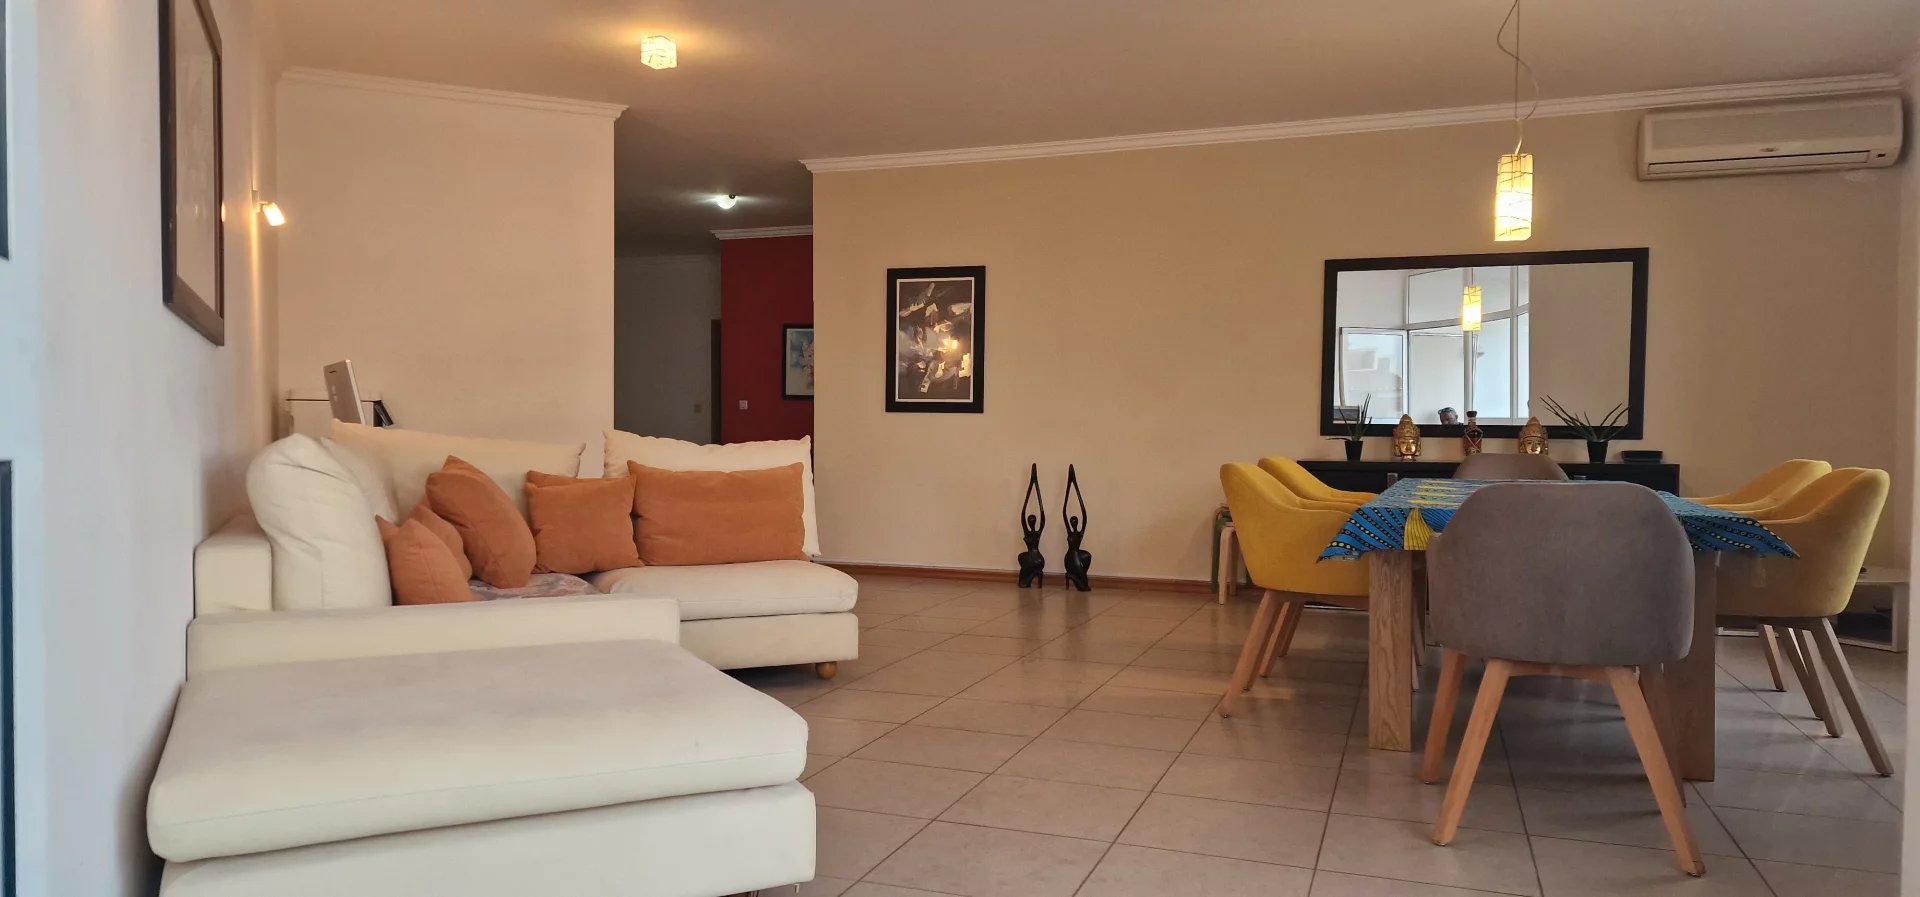 Apartamento para arrendamento sazonal no Palmarejo Baixo